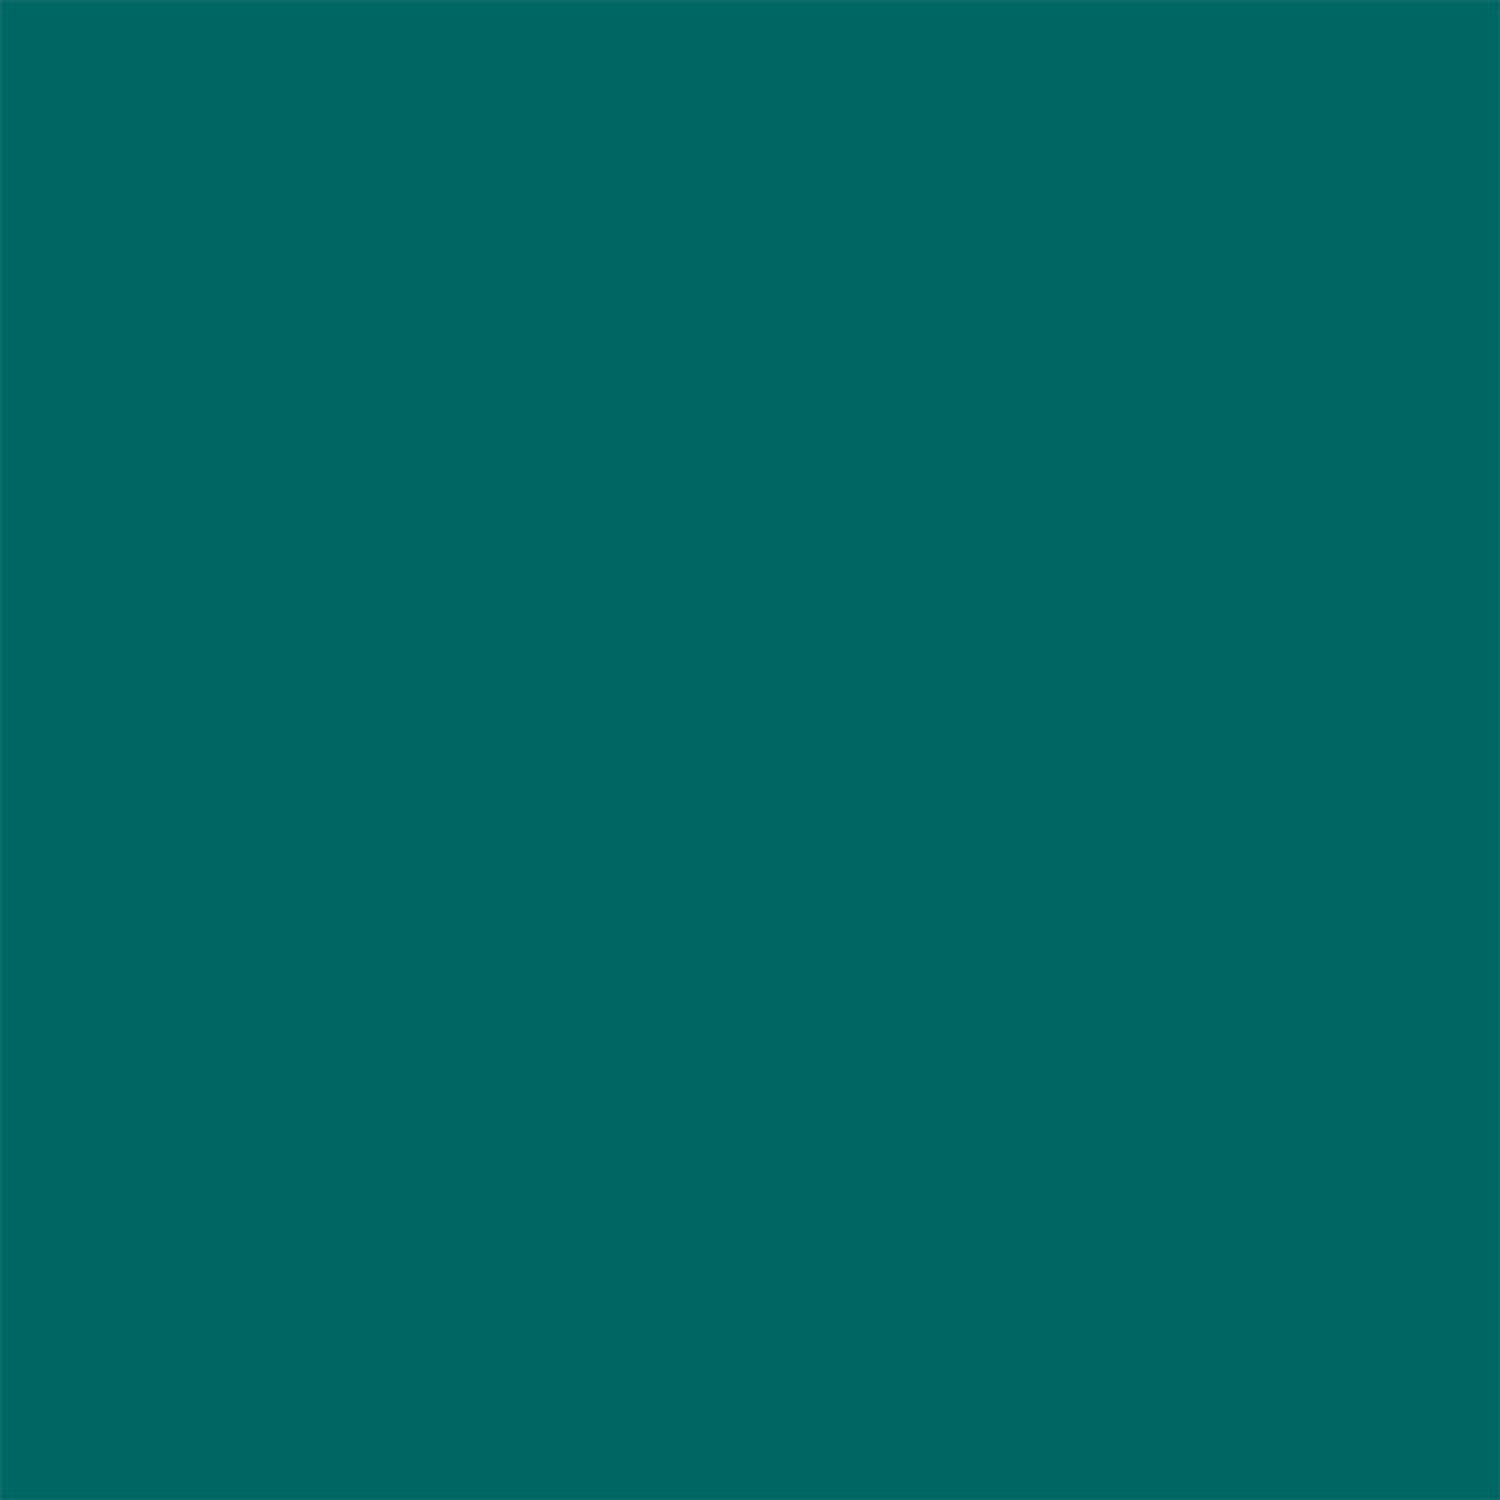 Inductiebeschermer - Groen Blauw - 81.2x52 cm - Inductiebeschermer - Inductie Afdekplaat Kookplaat - Inductie Mat - Anti-Slip - Keuken Decoratie - Keuken Accessoires